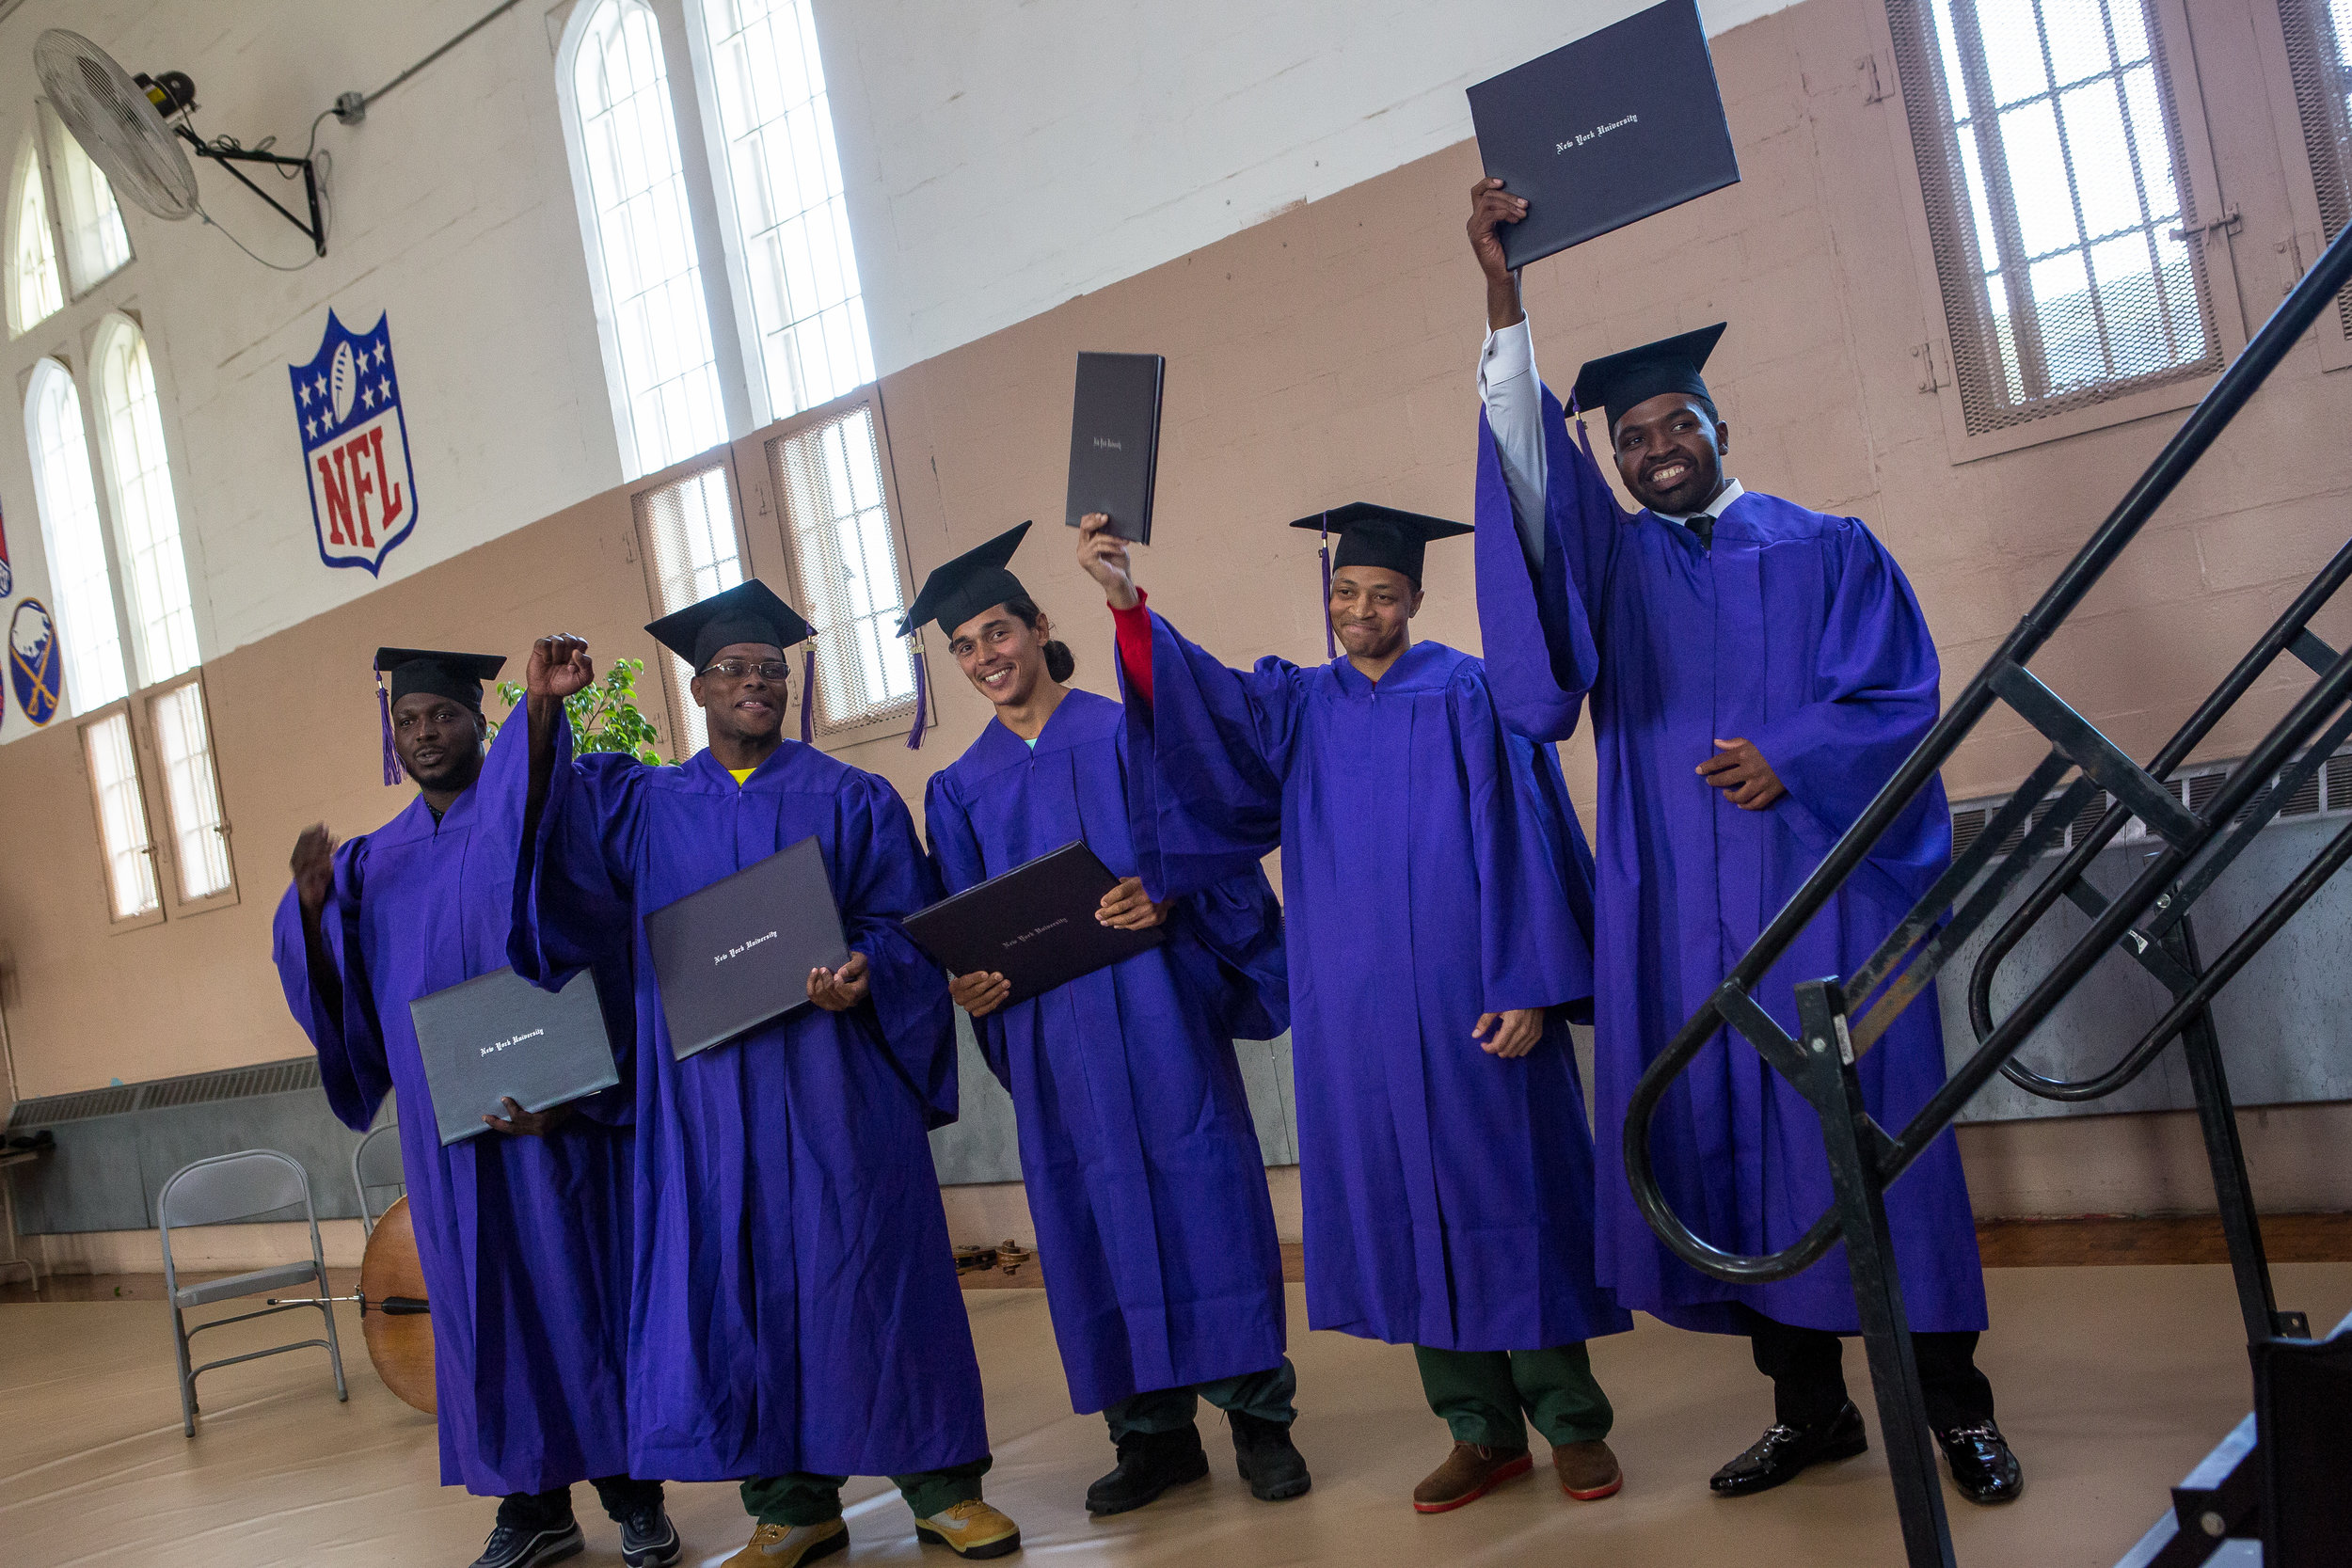  The graduates celebrate after receiving their diplomas. 